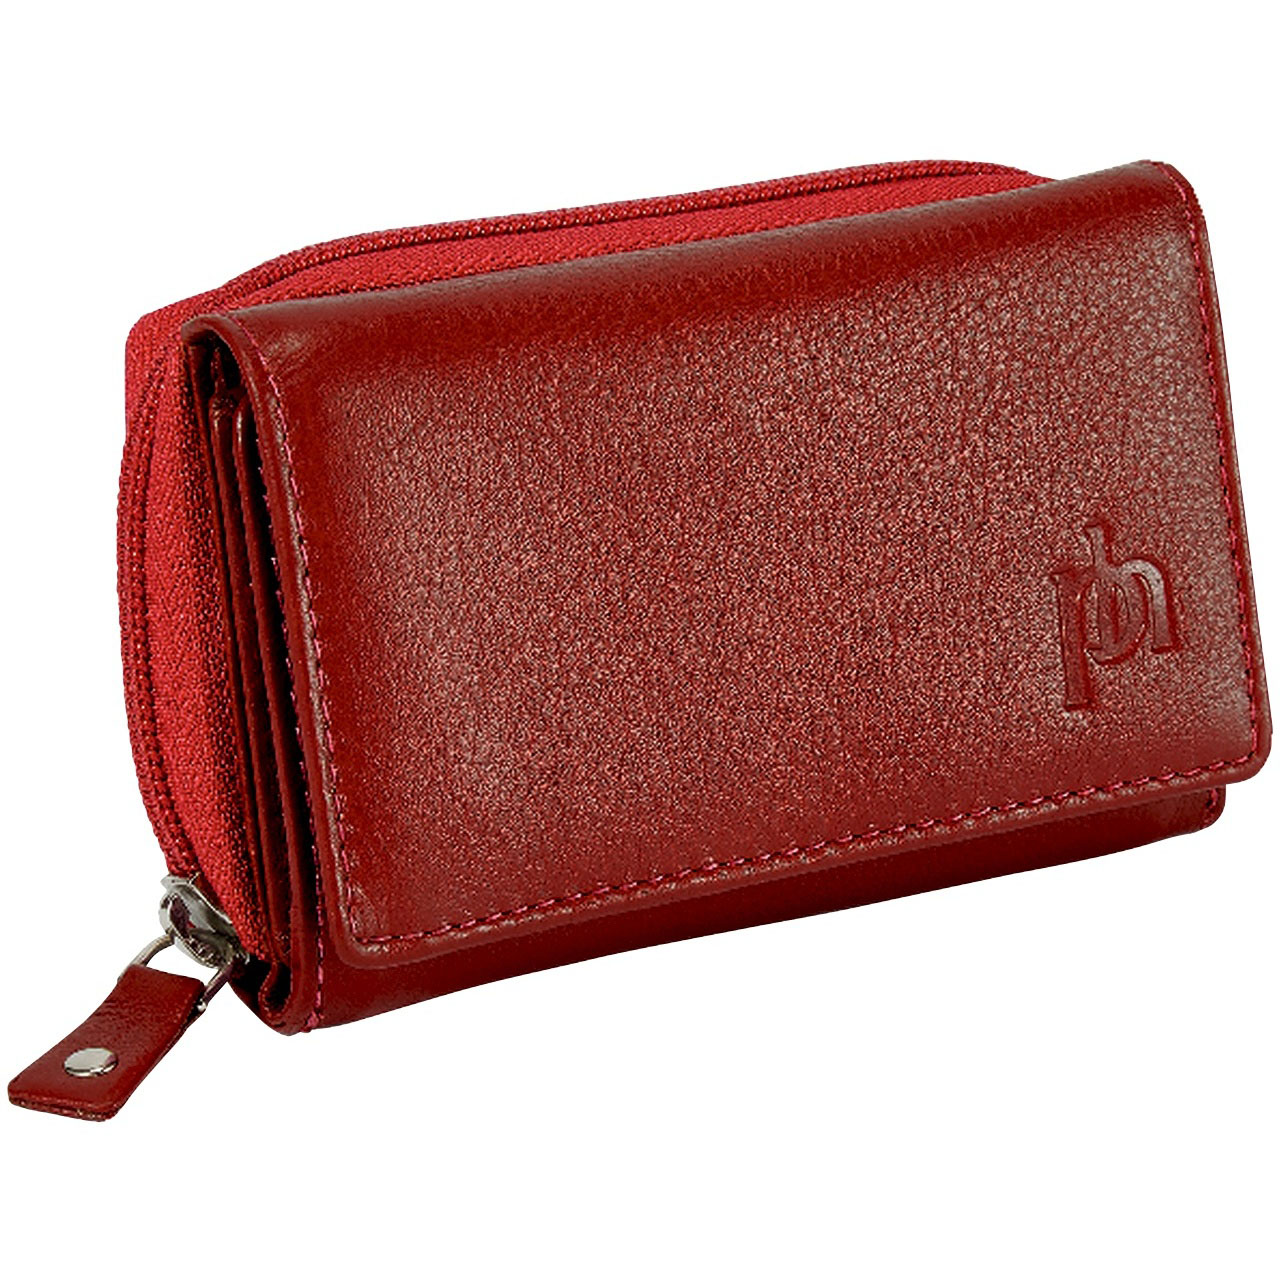 EyeCatchBags Fabretti Women's Leather Purse - Red : Amazon.co.uk: Fashion